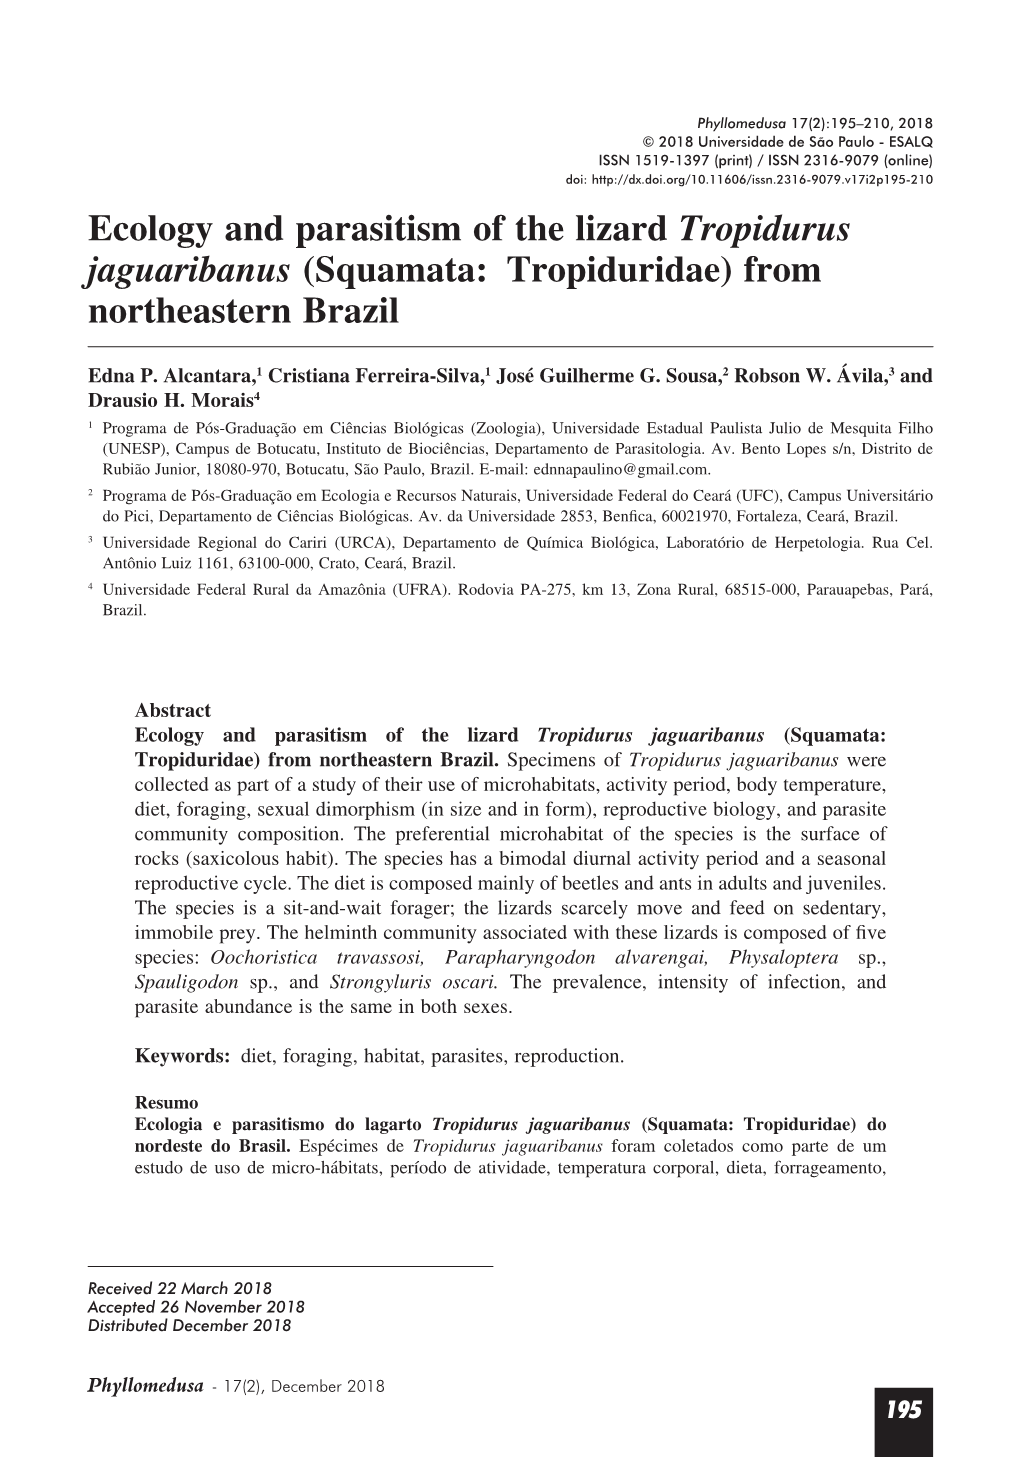 Ecology and Parasitism of the Lizard Tropidurus Jaguaribanus (Squamata: Tropiduridae) from Northeastern Brazil